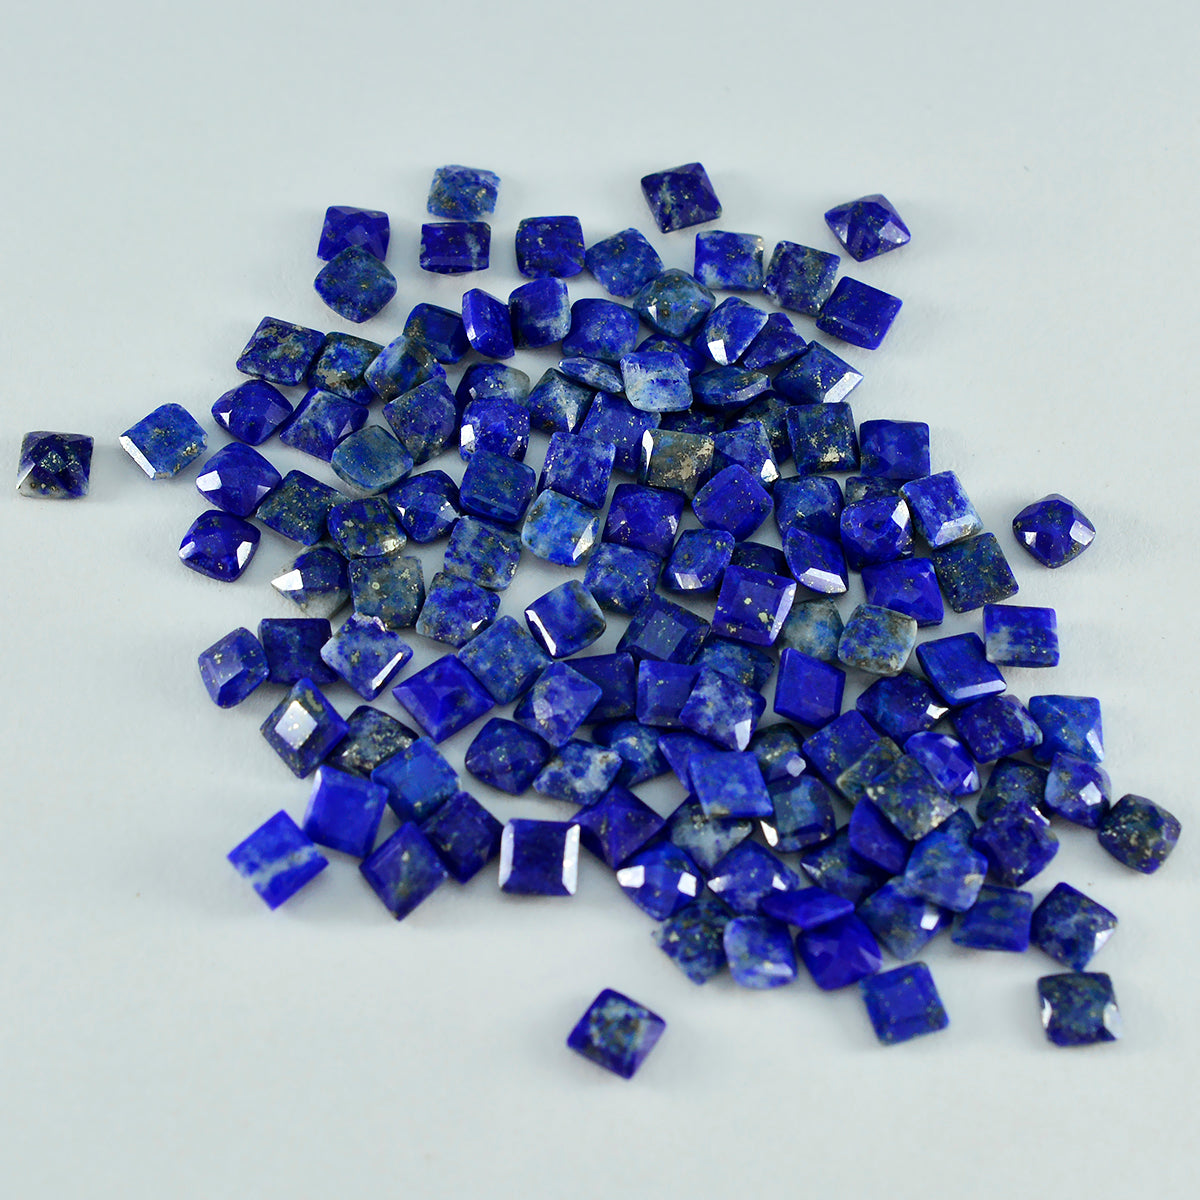 Riyogems 1PC Real Blue Lapis Lazuli Faceted 3x3 mm Square Shape pretty Quality Loose Gems